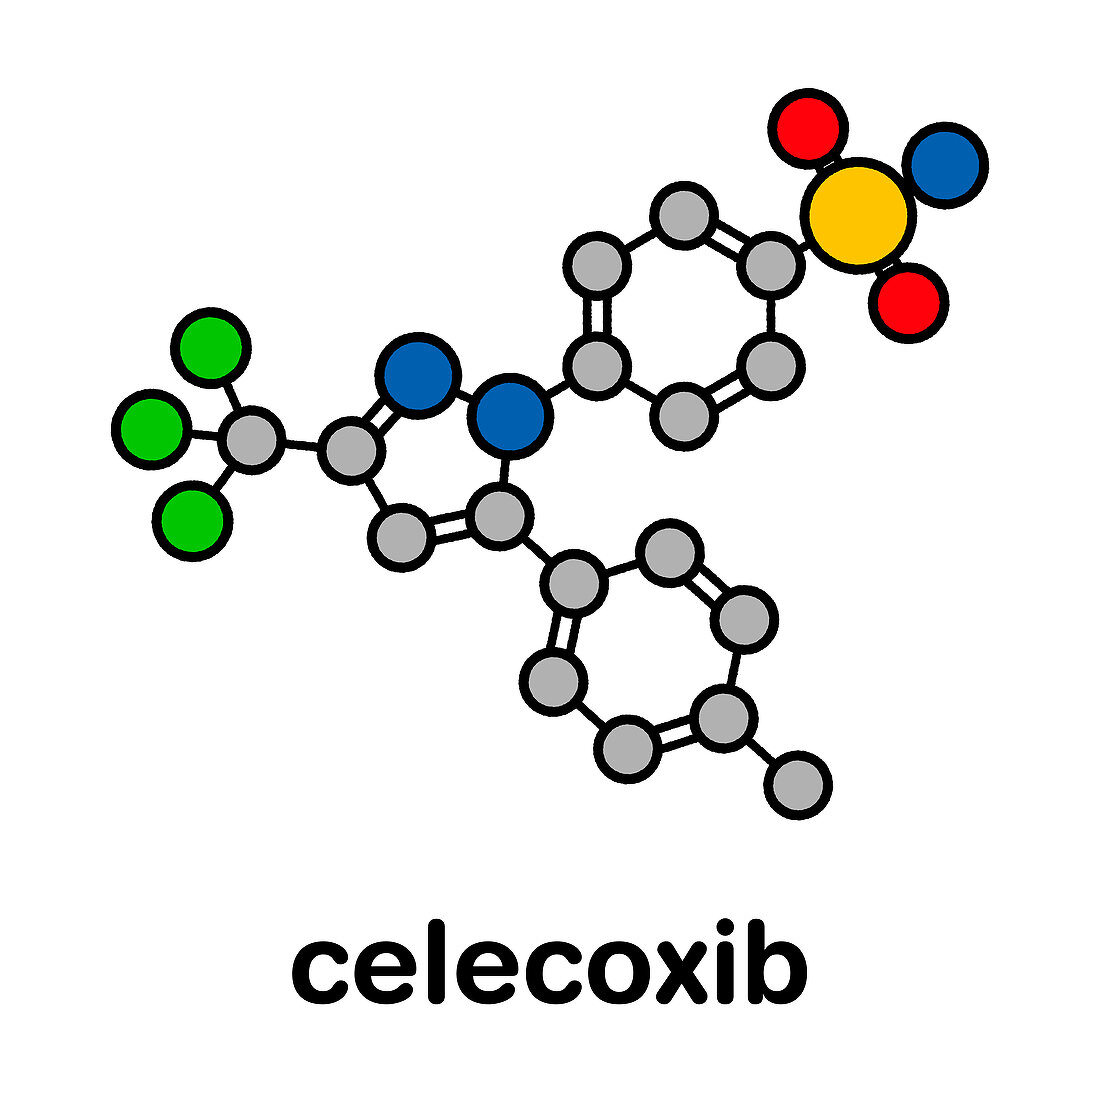 Celecoxib pain and inflammation drug, molecular model